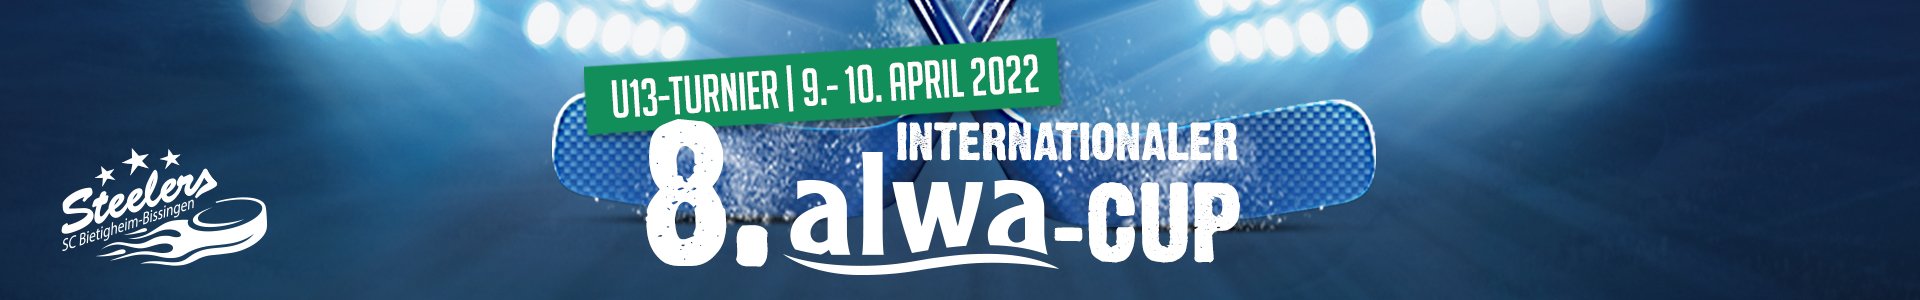 alwa-cup 2022 Header 1920x300